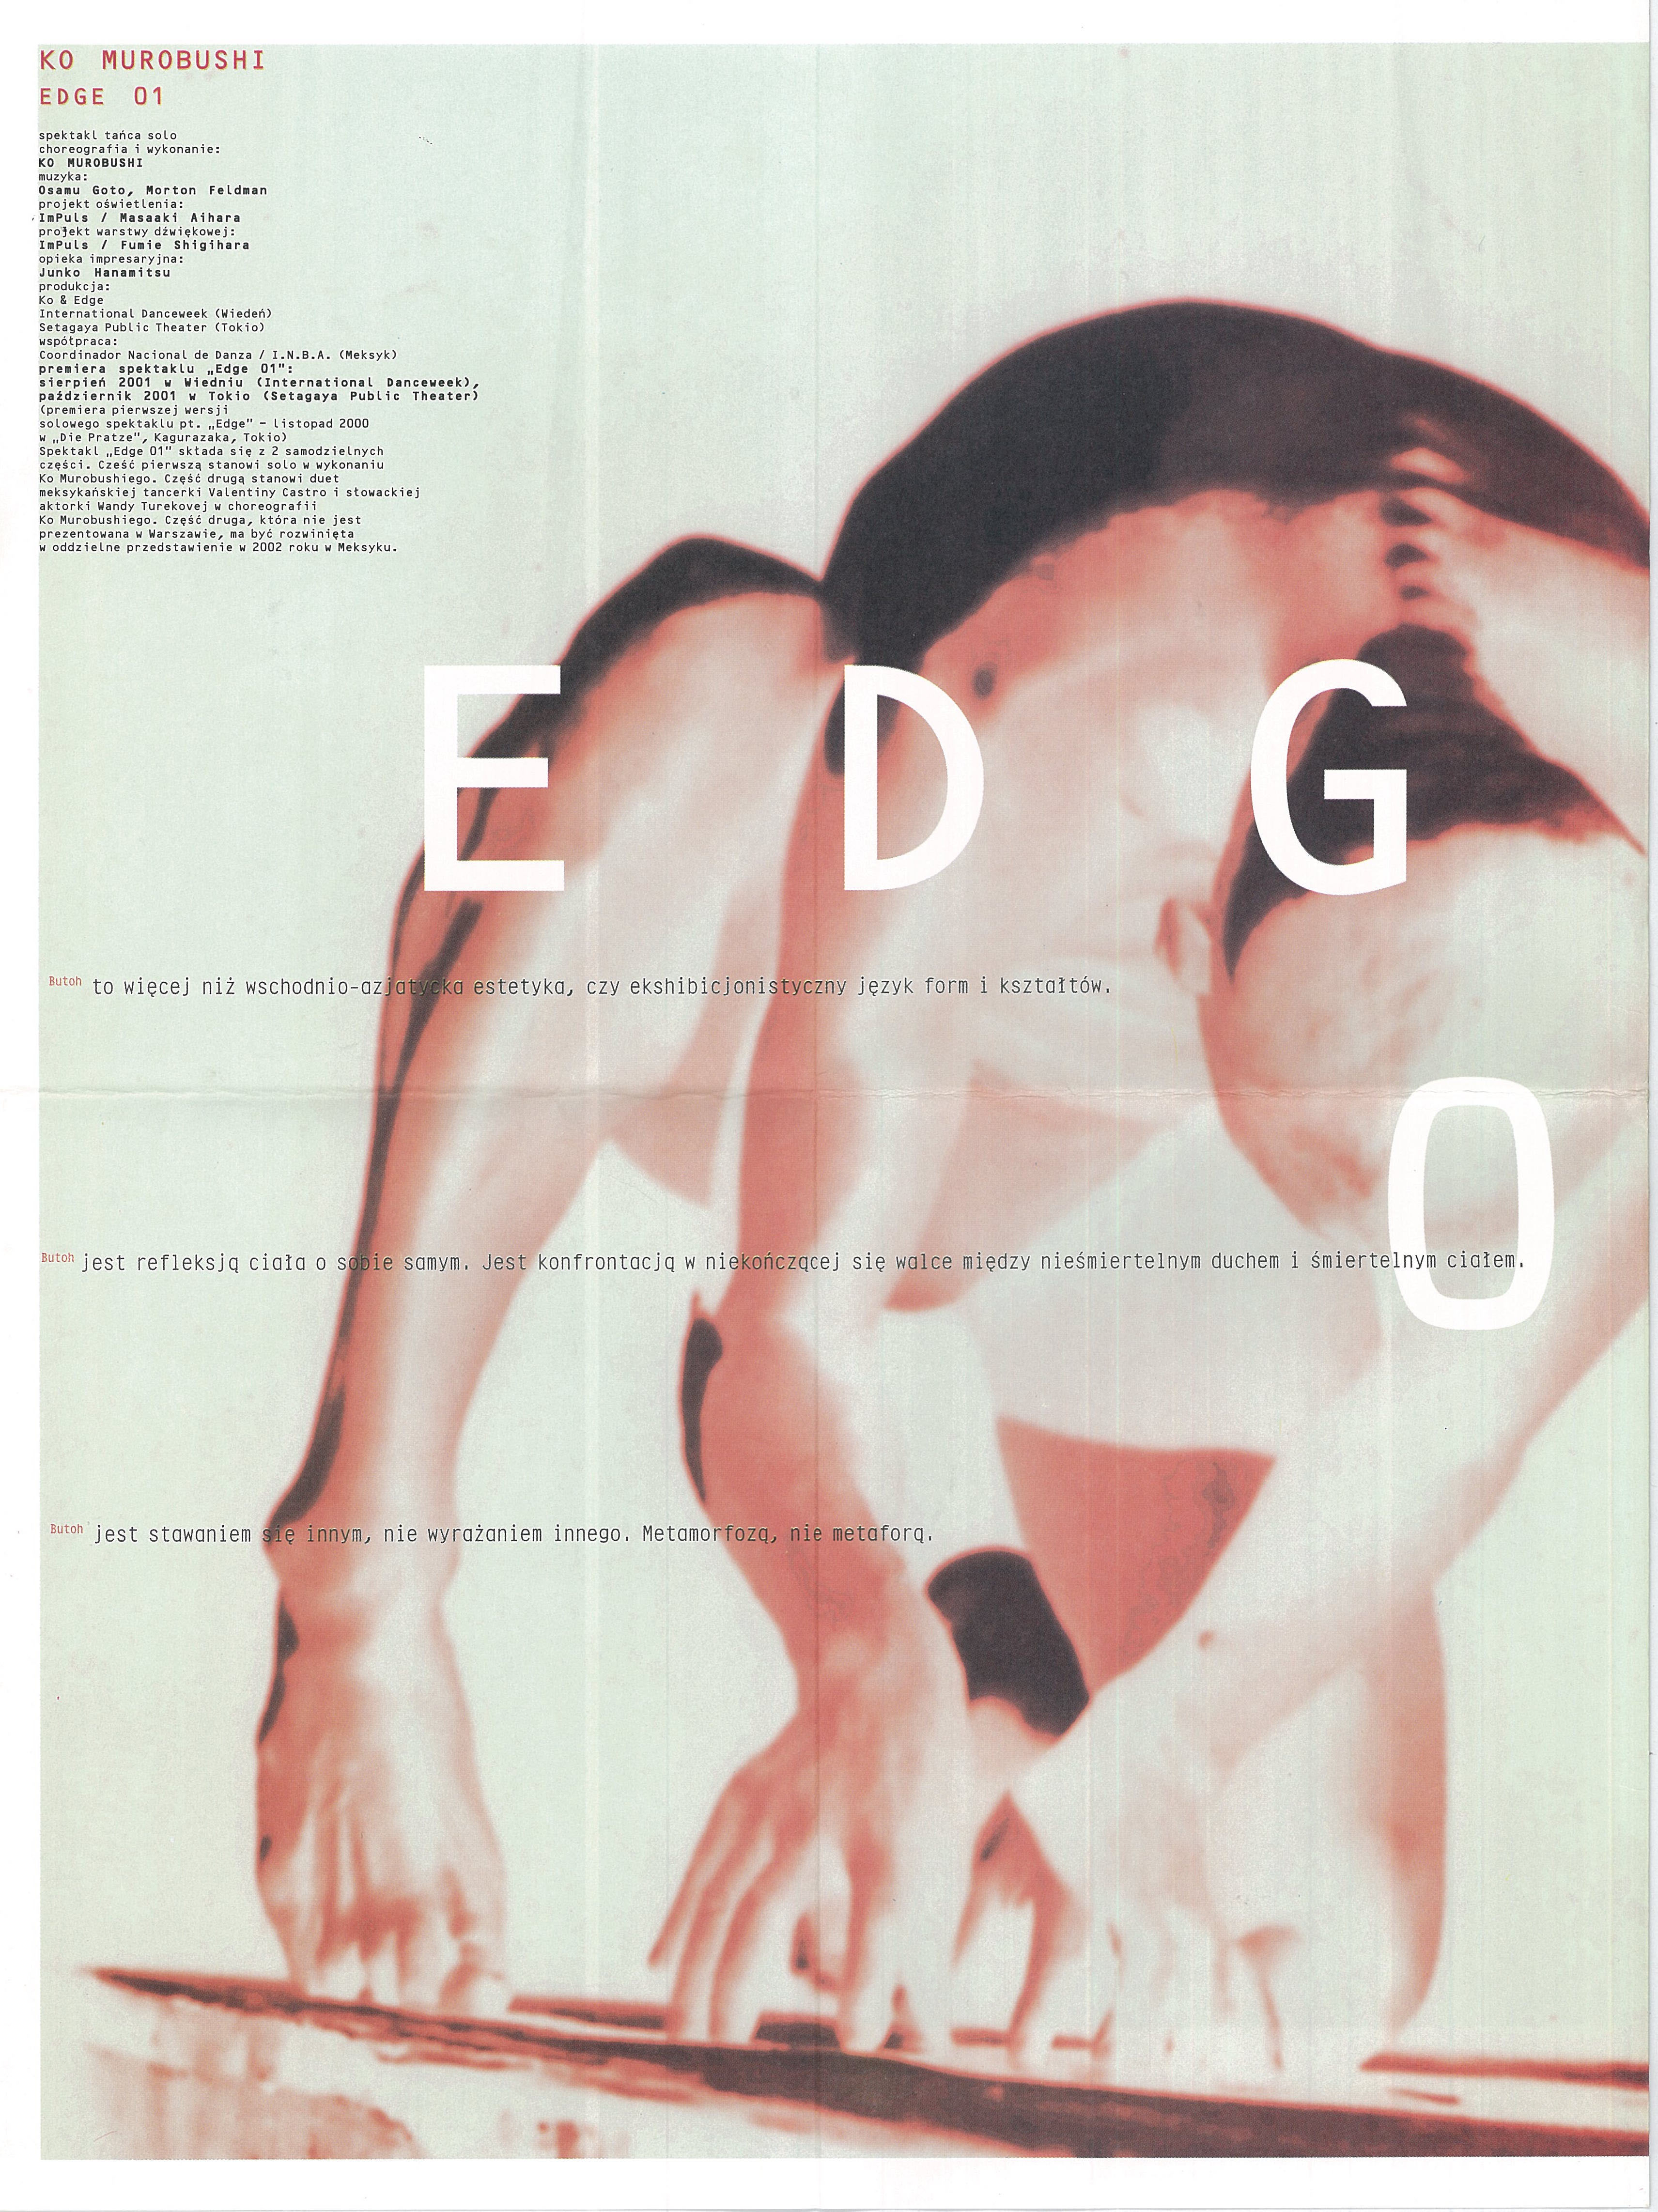 “Edge 01”
